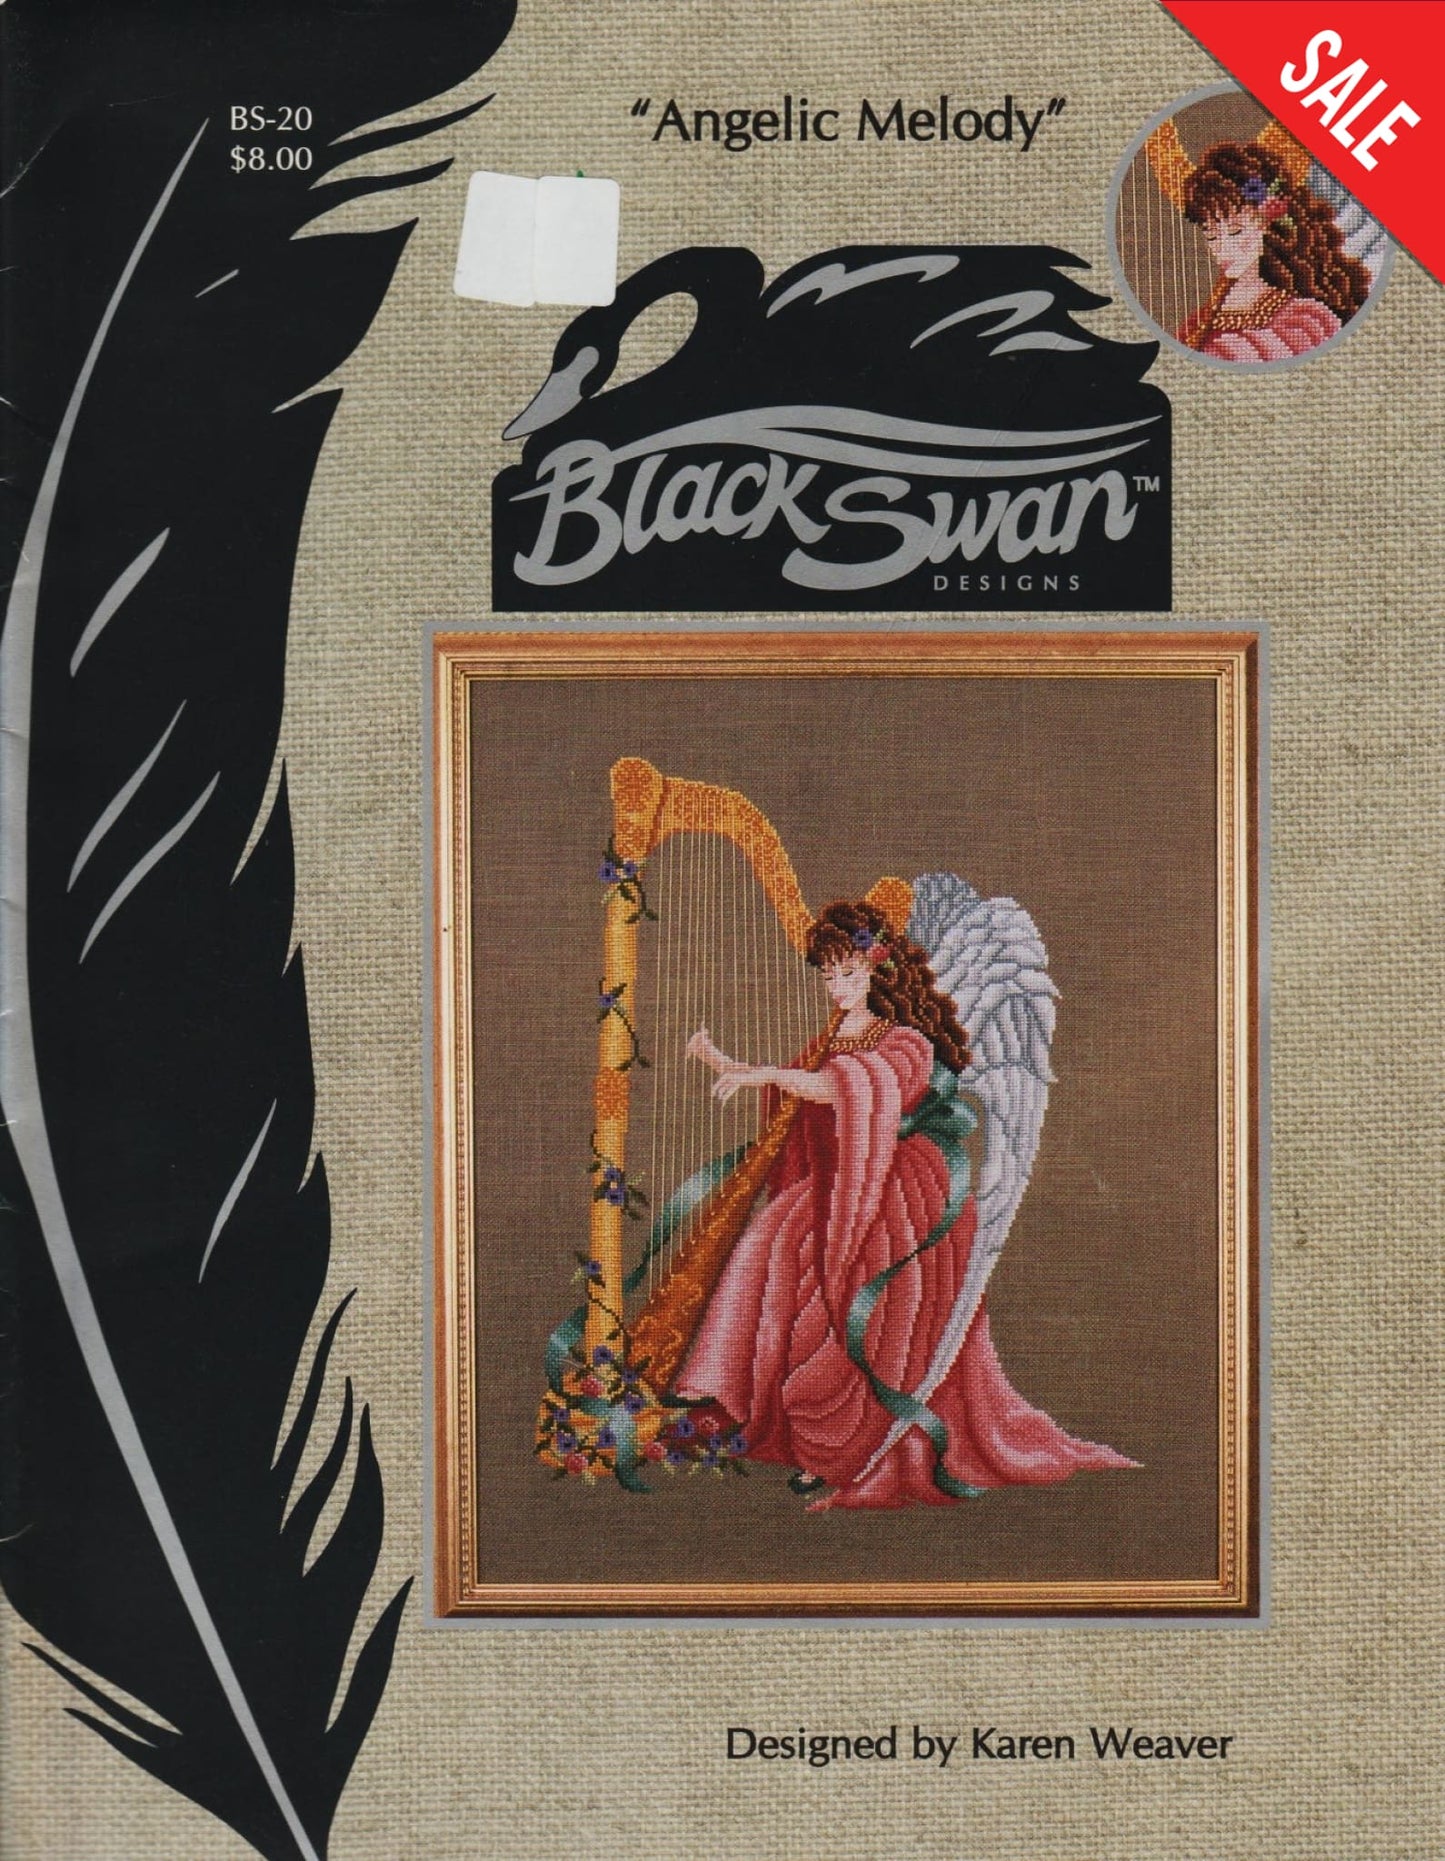 Black Swan Angelic Melody BS-20 cross stitch pattern